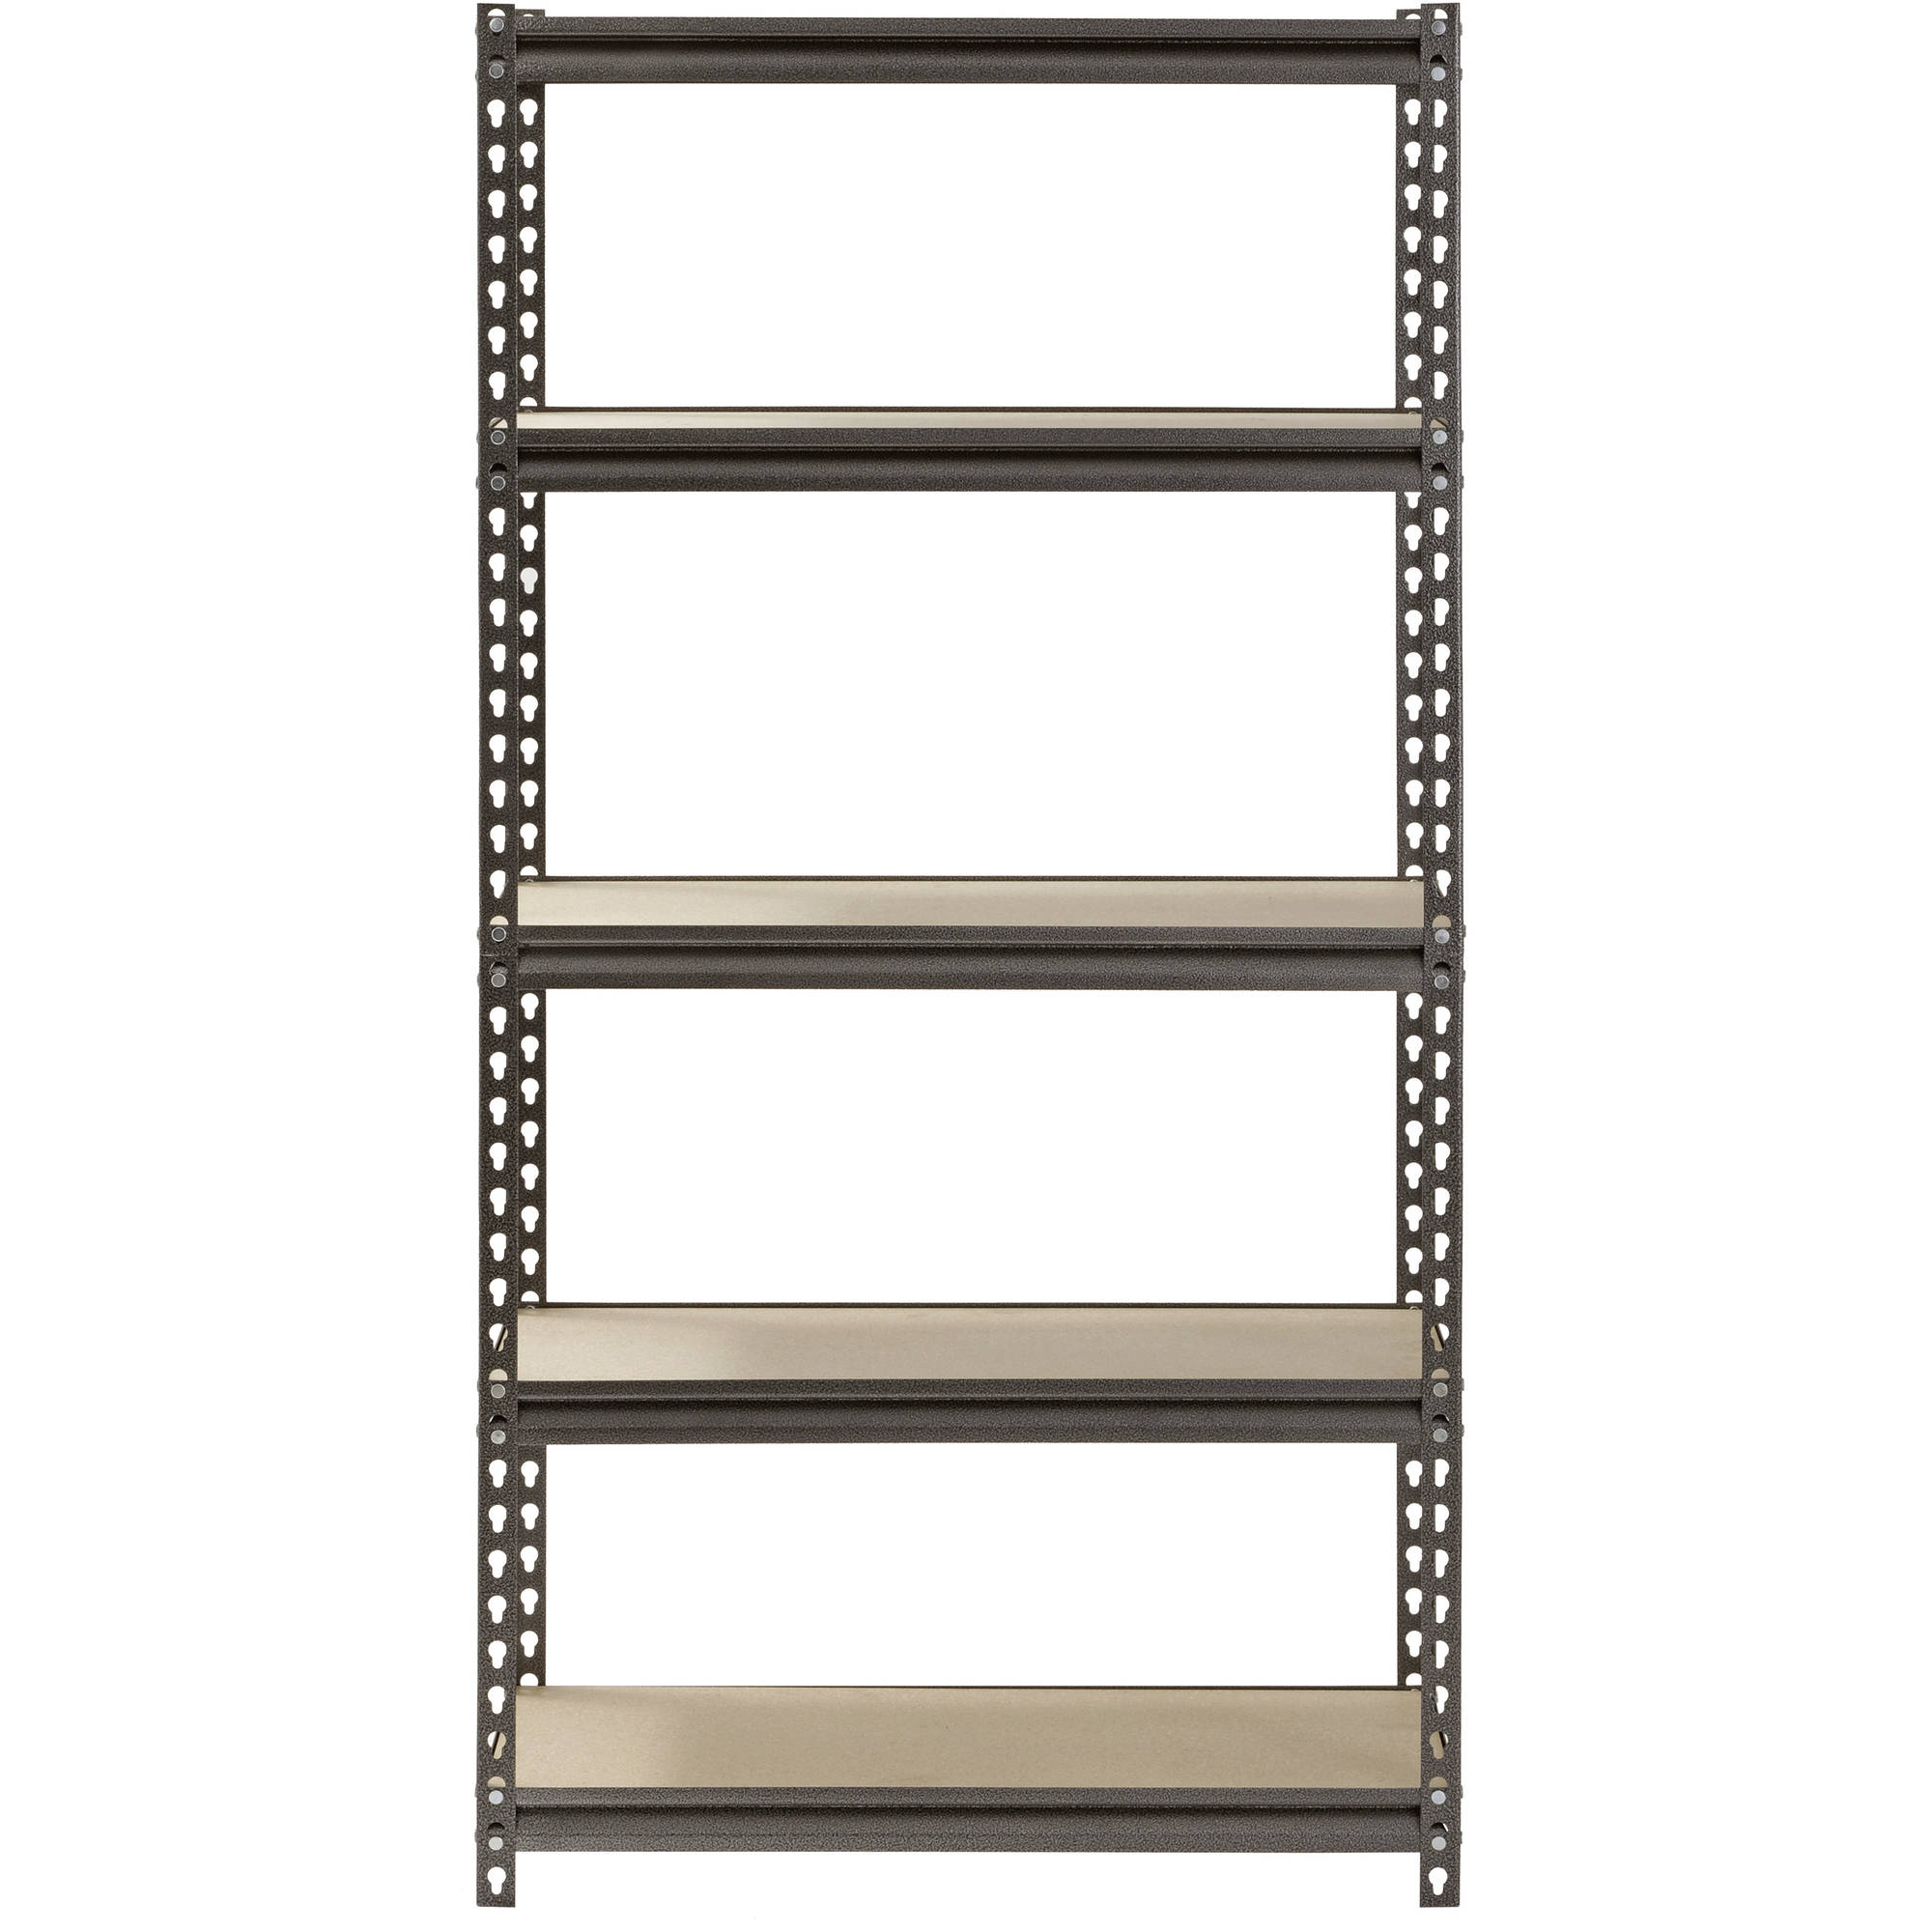 Muscle Rack 30"W x 12"D x 60"H 5-Shelf Steel Freestanding Shelves, 500 lbs. Capacity per Shelf; Silver - image 1 of 6